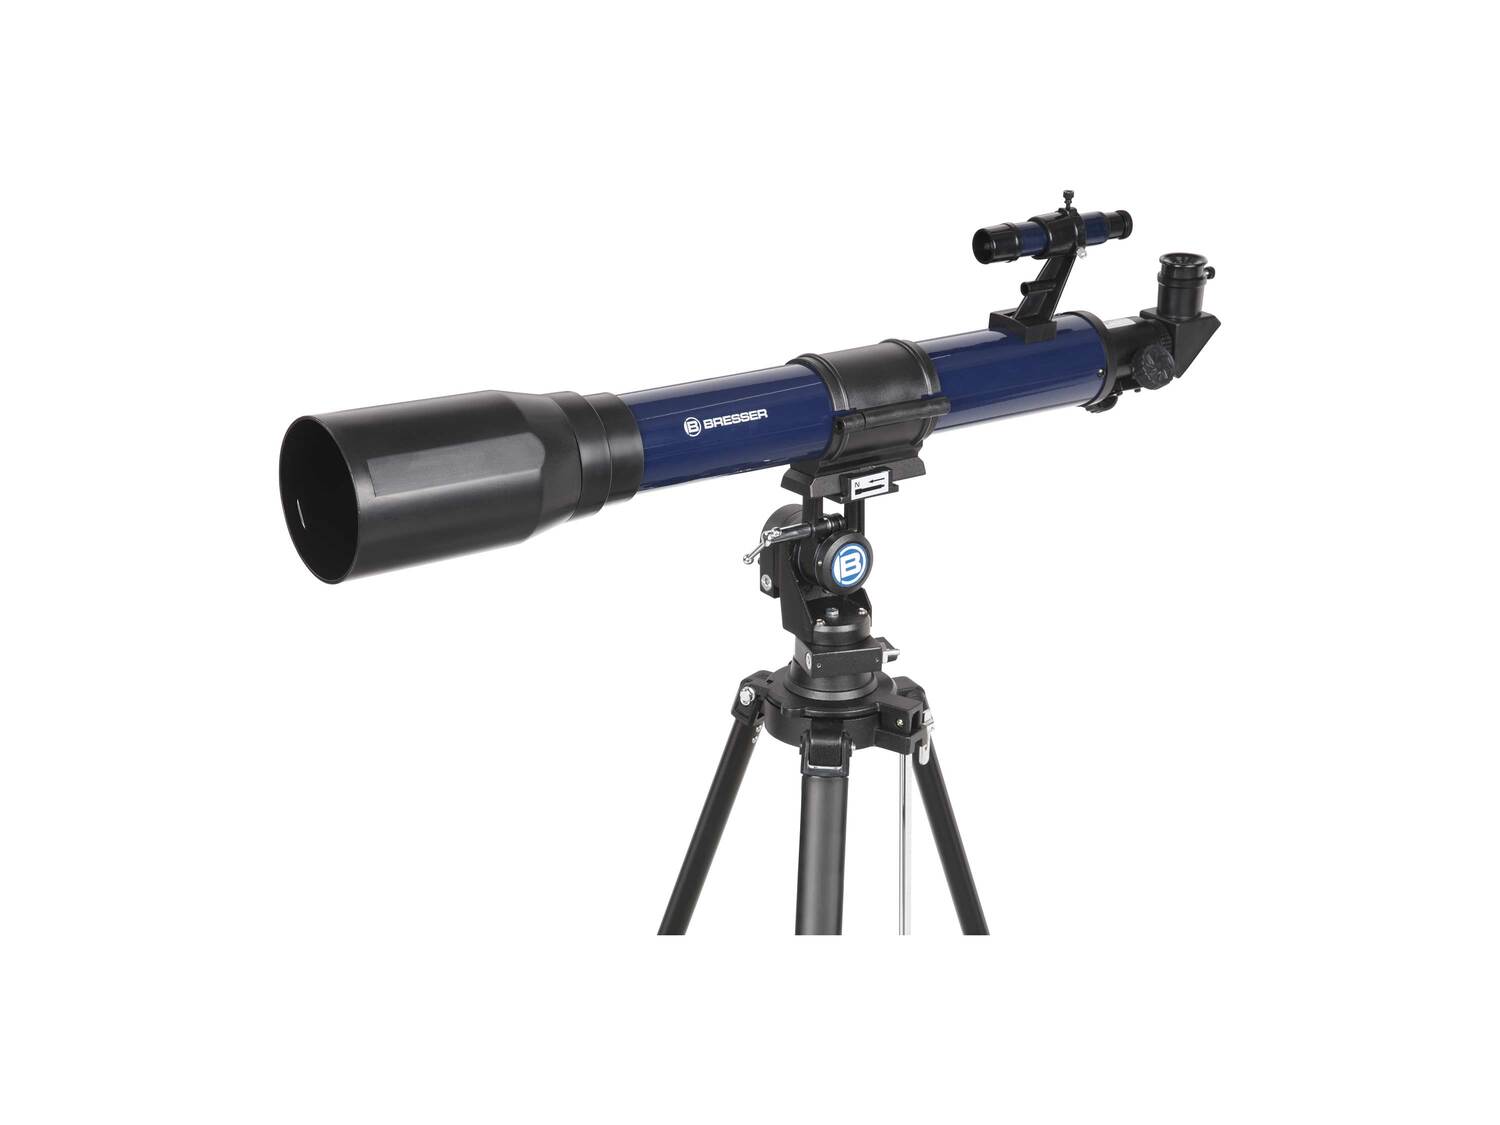 Teleskop SkyLux EL 70/700 SF z uchwytem na smartfon Bresser, cena 349,00 PLN 
- ...